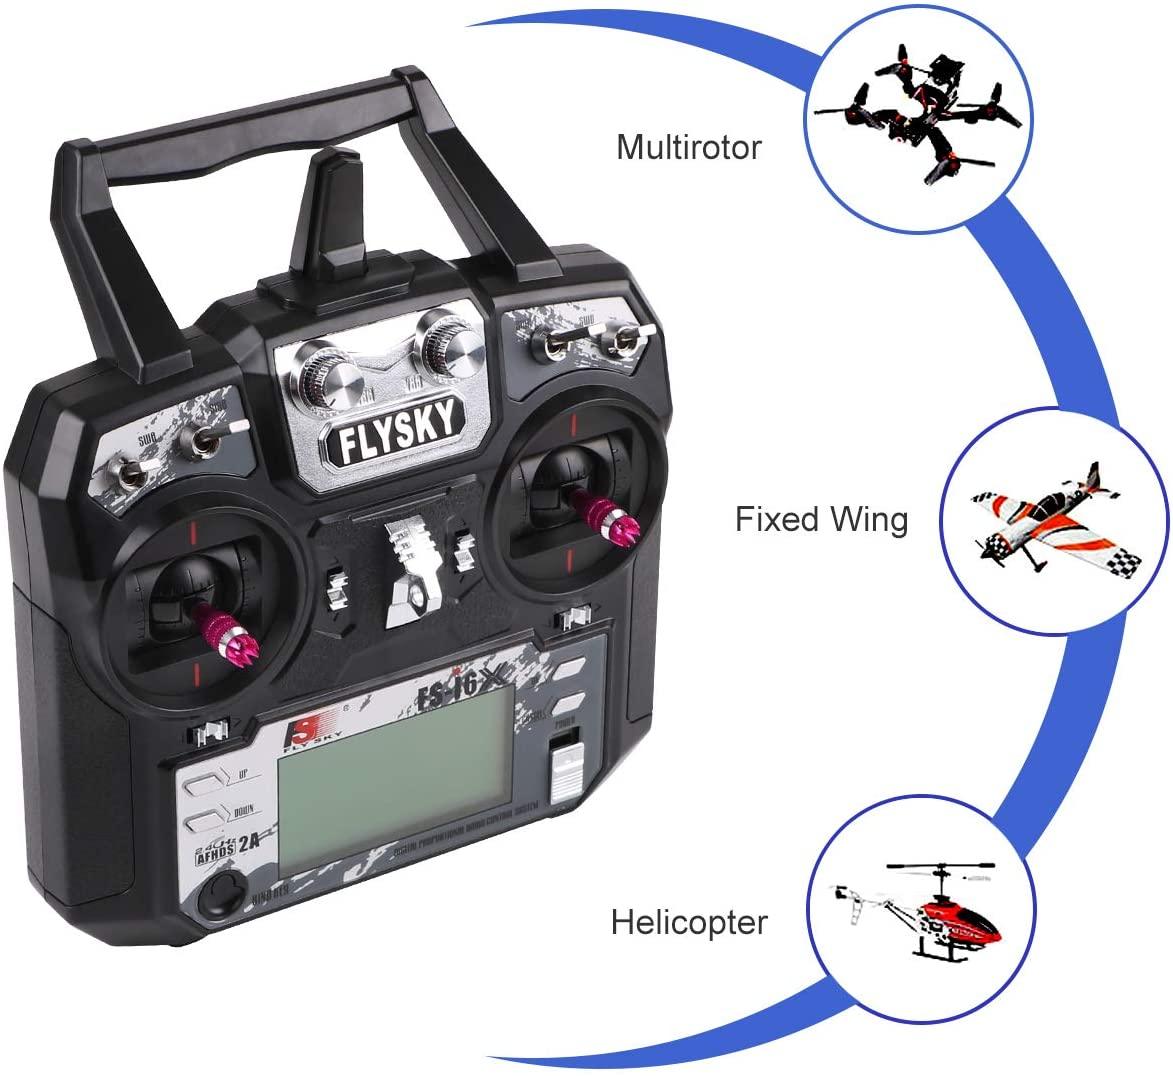 Flysky FS-i6X 10CH Radio Transmitter + Flysky ia10B Receiver 2.4GHz, AFHDS 2A for FPV Racing RC Drone Quadcopter - RCDrone